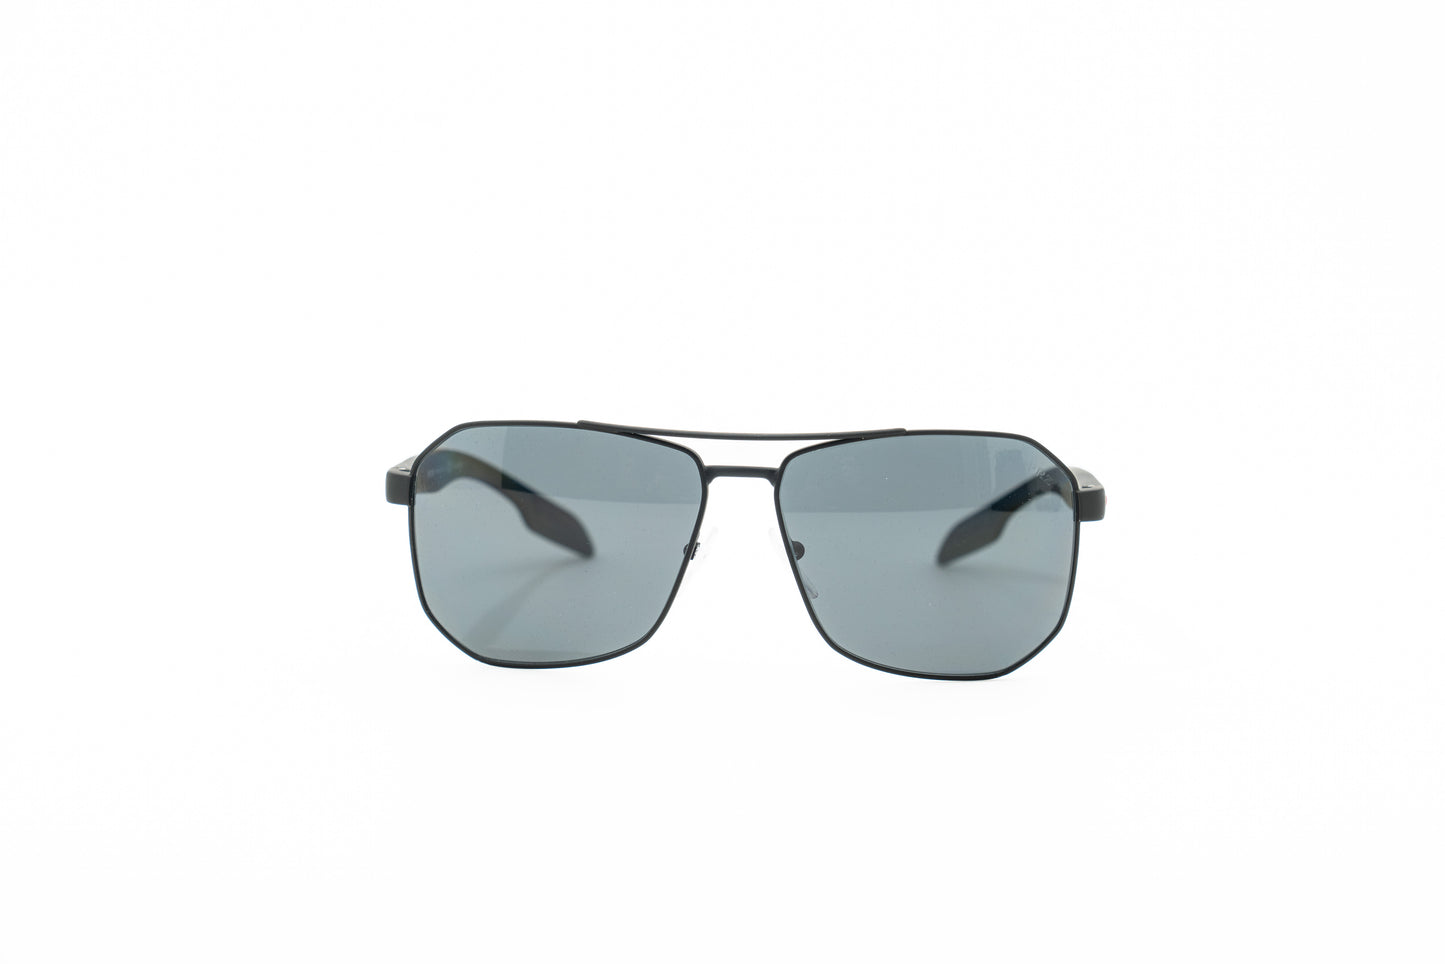 Prada DG0-5Z1 Stainless Steel Sunglasses in Black